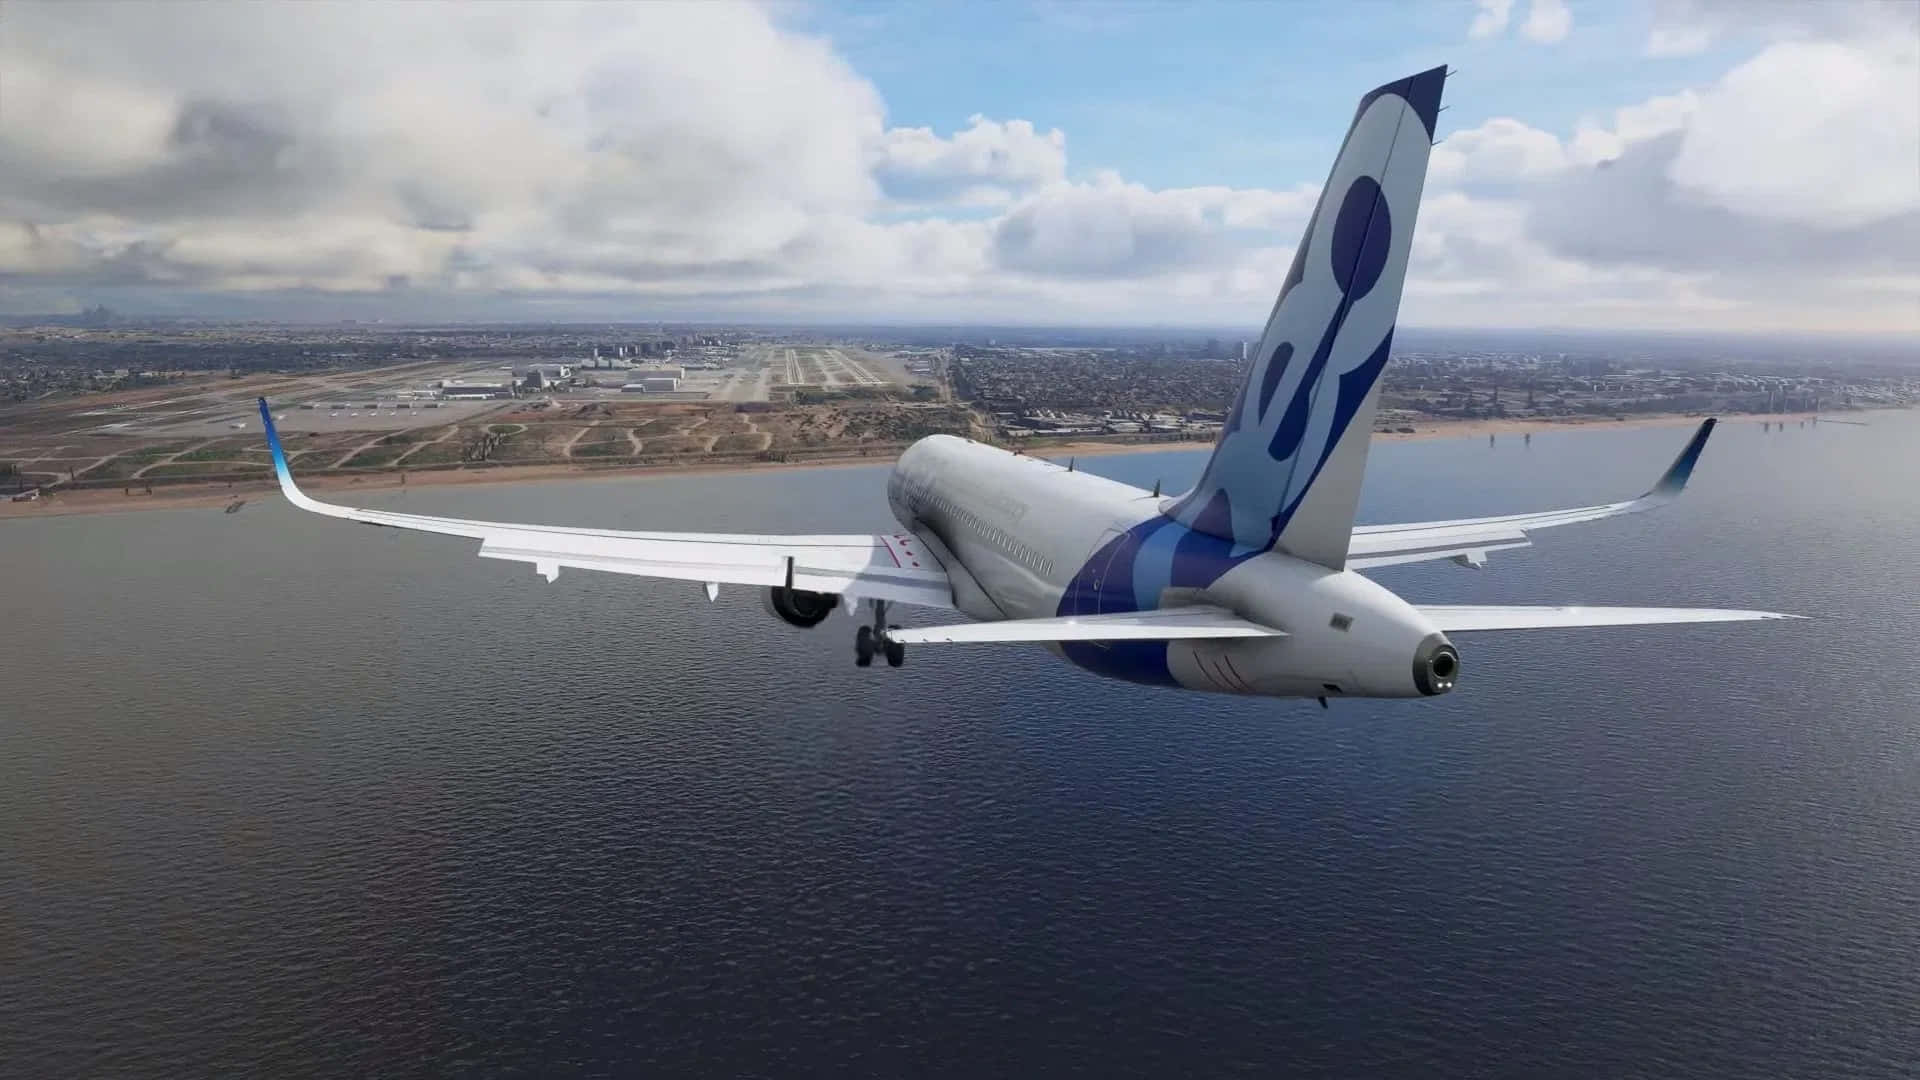 Microsoft Flight Simulator 2020 Performance at 4K